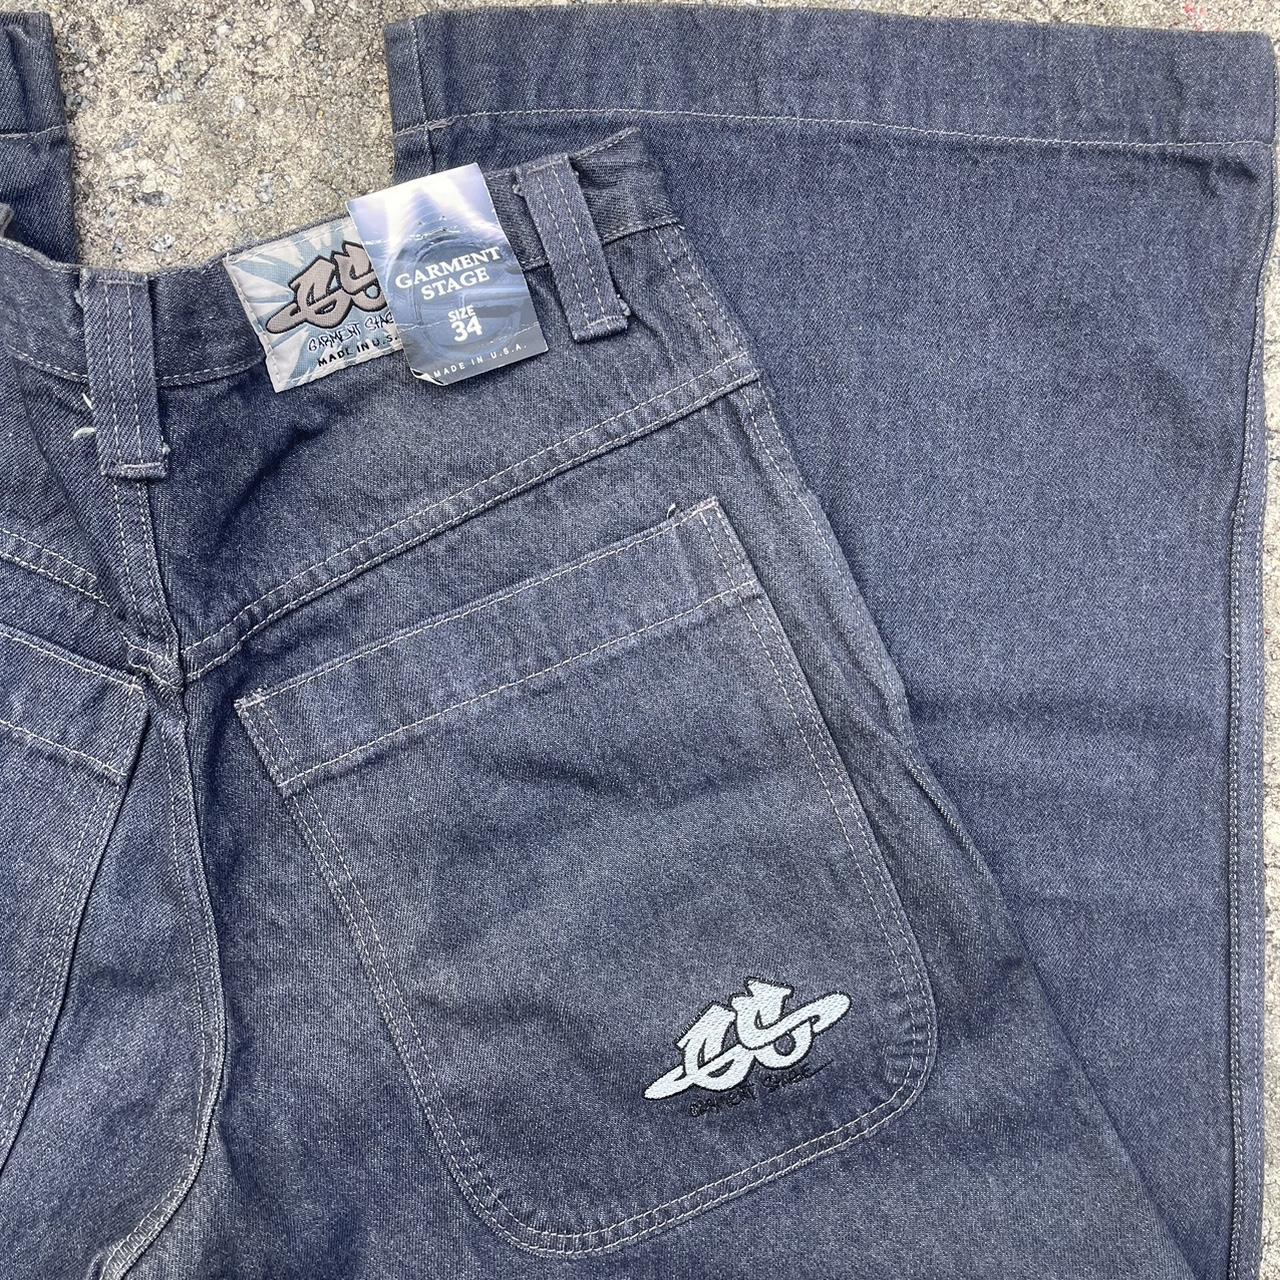 Rare Vintage Y2K Garmet Stage Baggy Jeans Size 34... - Depop